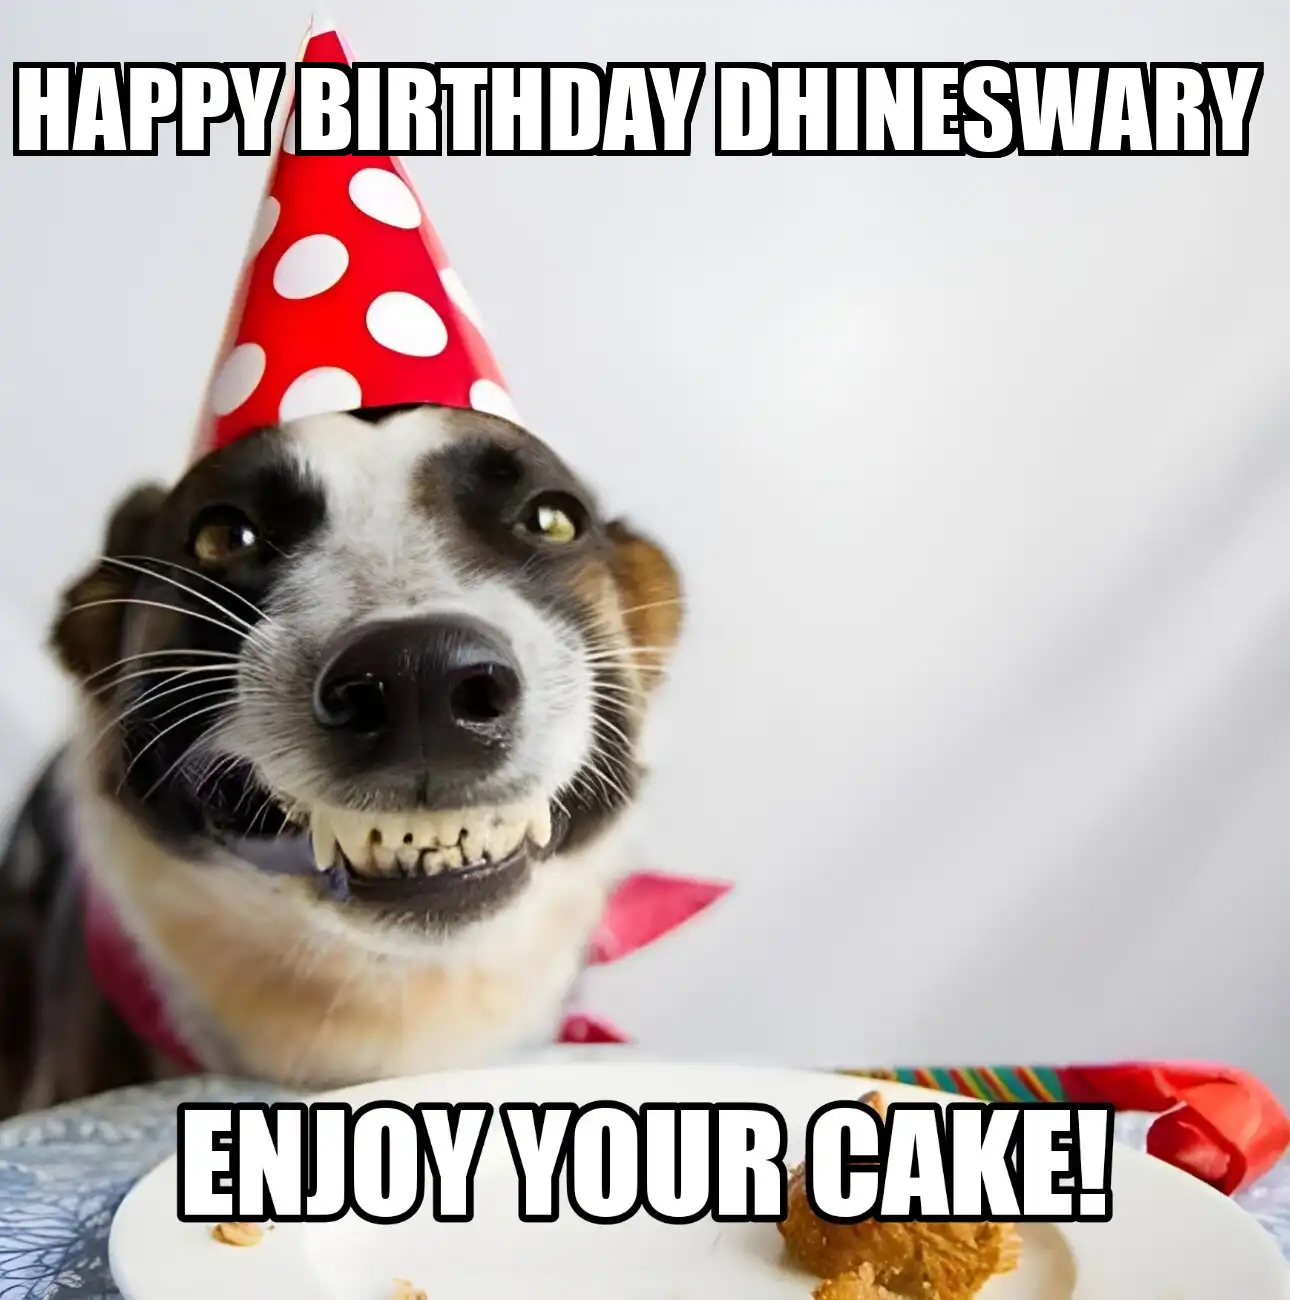 Happy Birthday Dhineswary Enjoy Your Cake Dog Meme